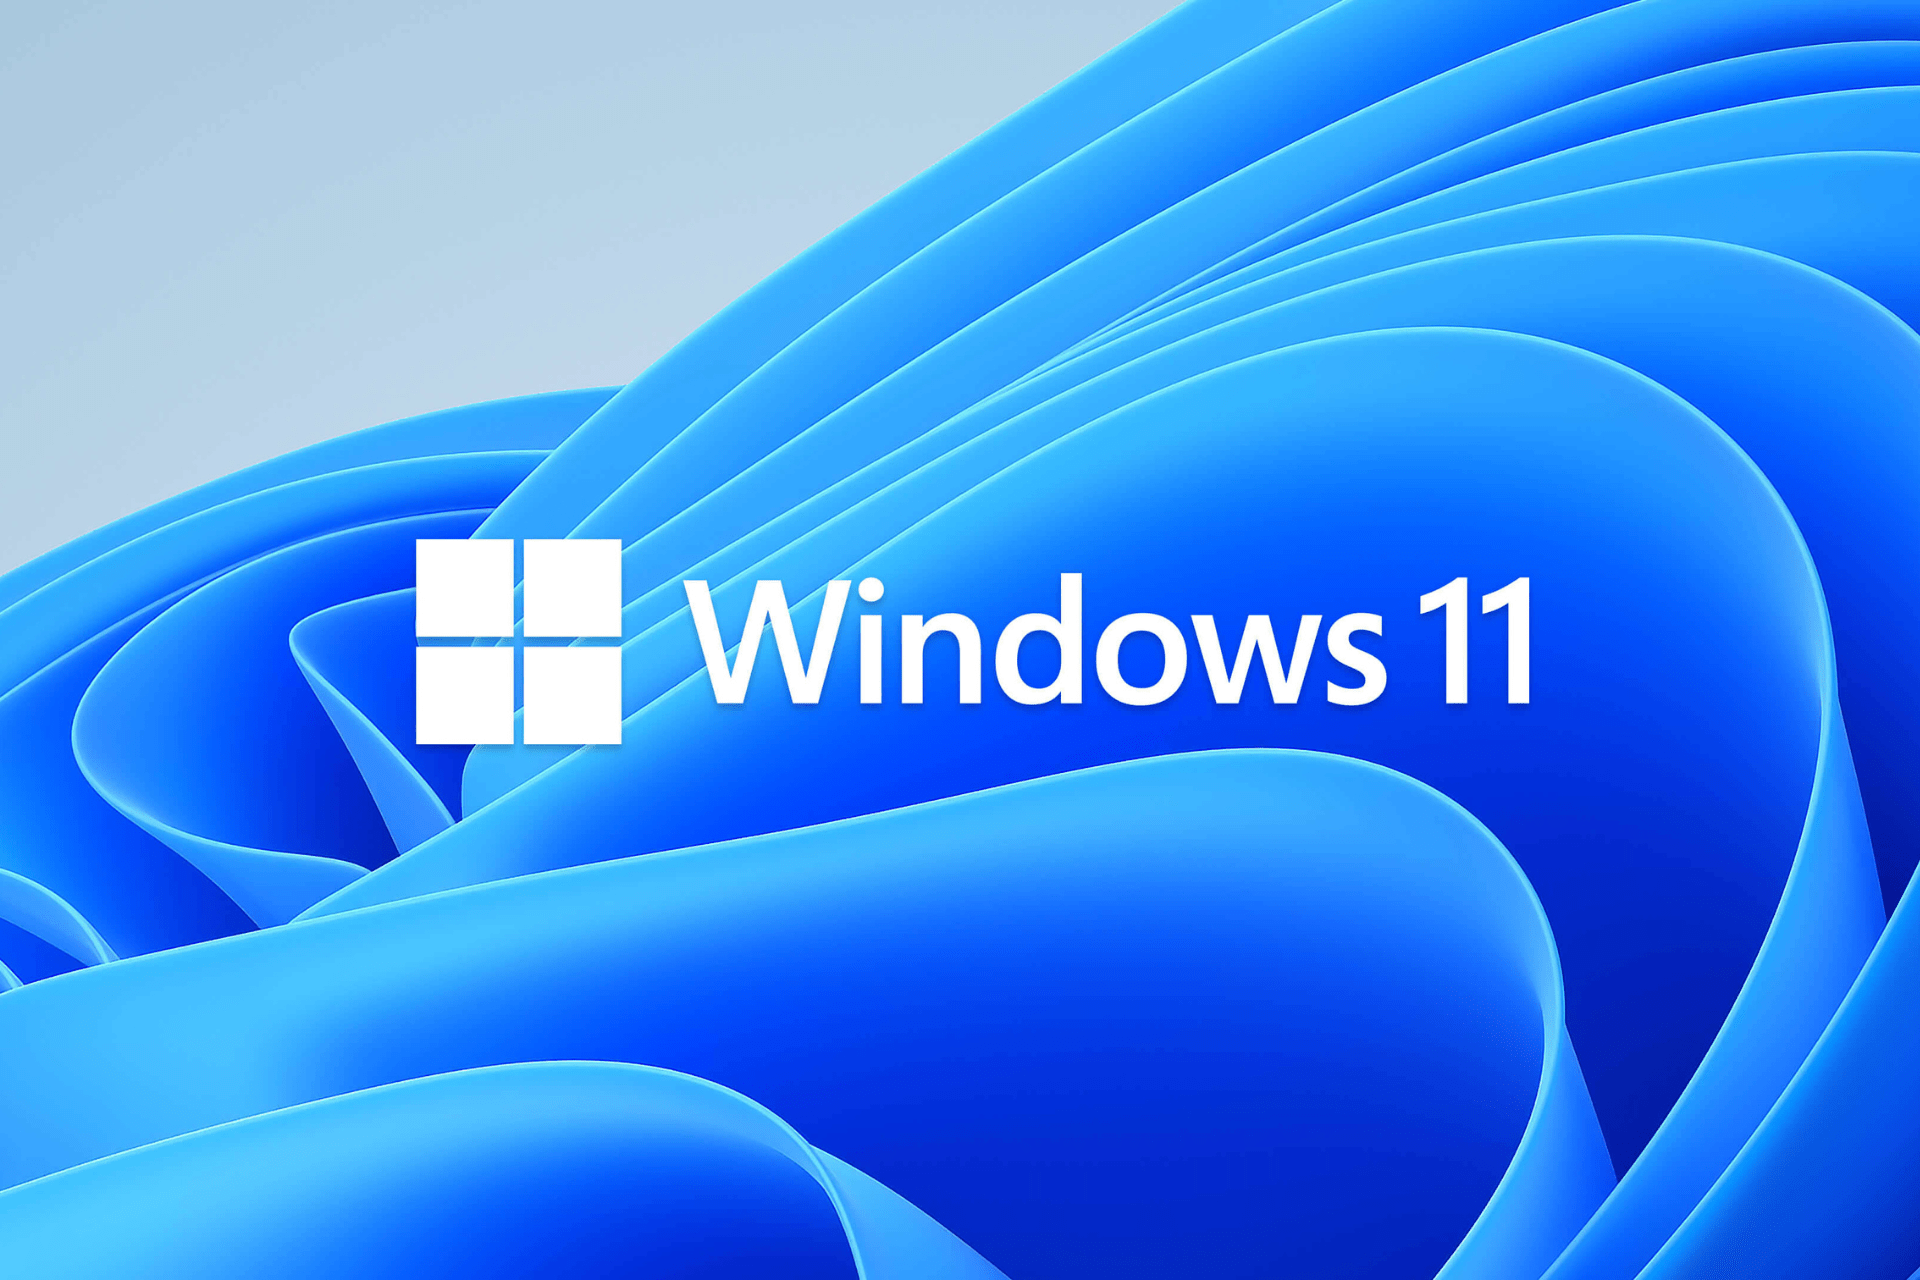 Windows 11 Wallpaper Keeps Changing: 5 Ways to Stop It